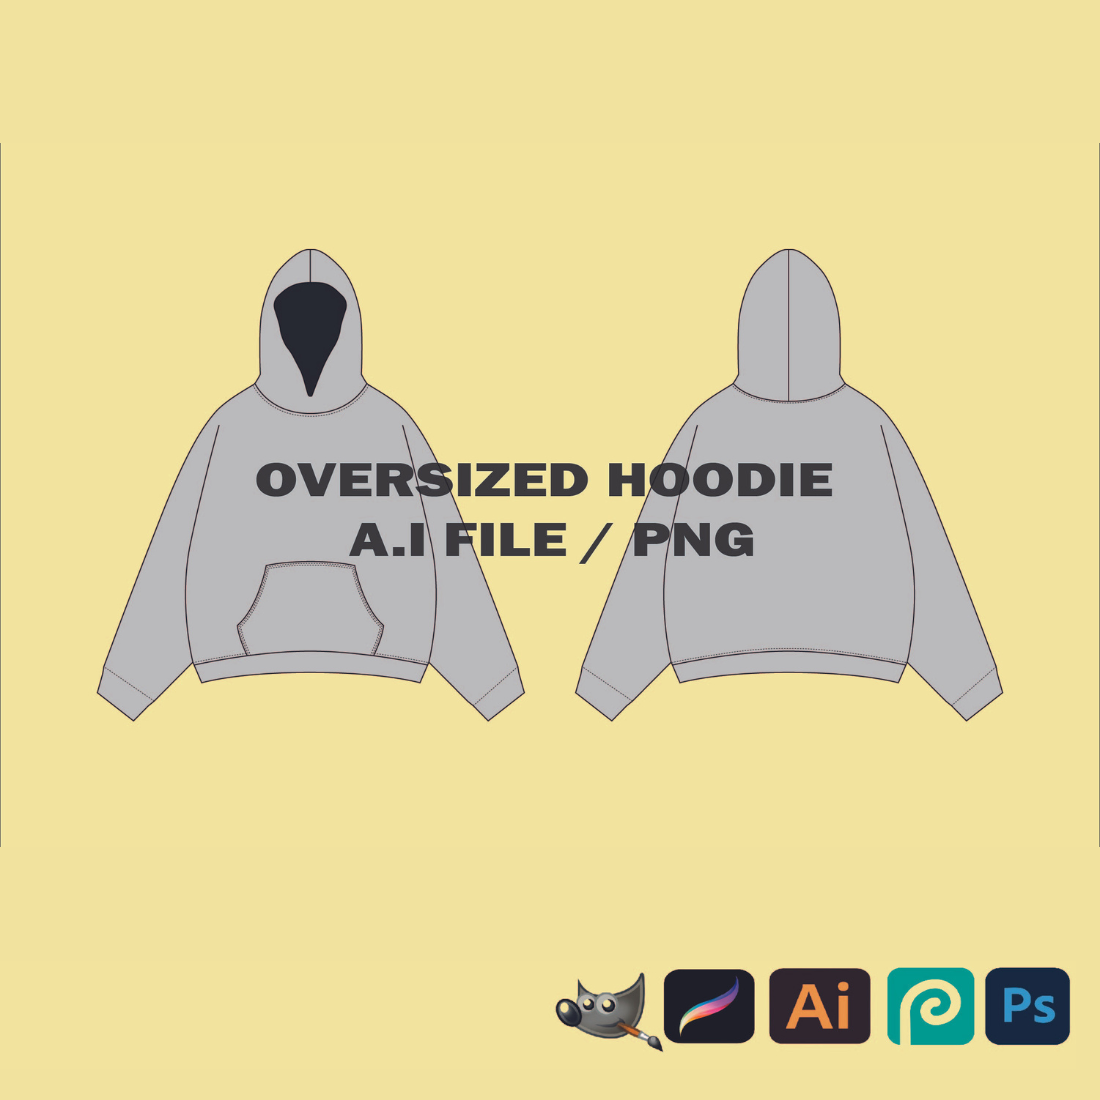 Streetwear Hoodie Sweatshirt Mockup Vector Adobe Illustrator, Procreate, PNG, Clothing Template Sketch Tech Pack - Download cover image.